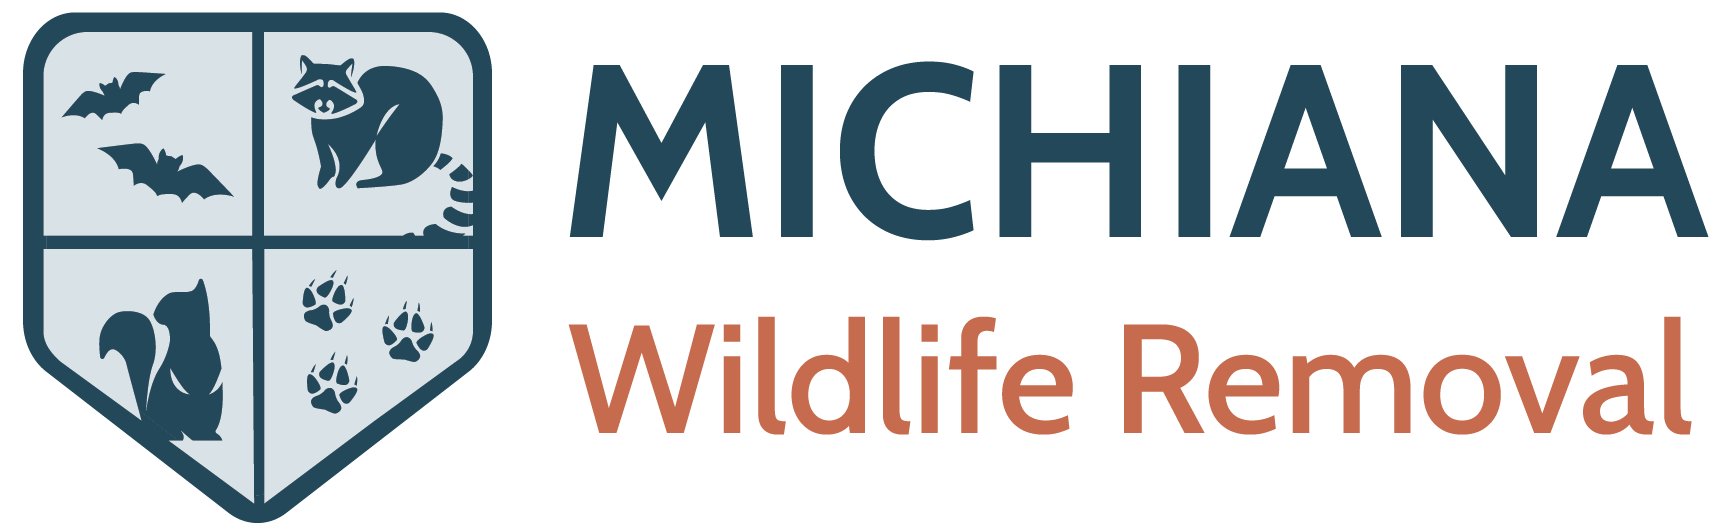 michiana wildlife removal logo